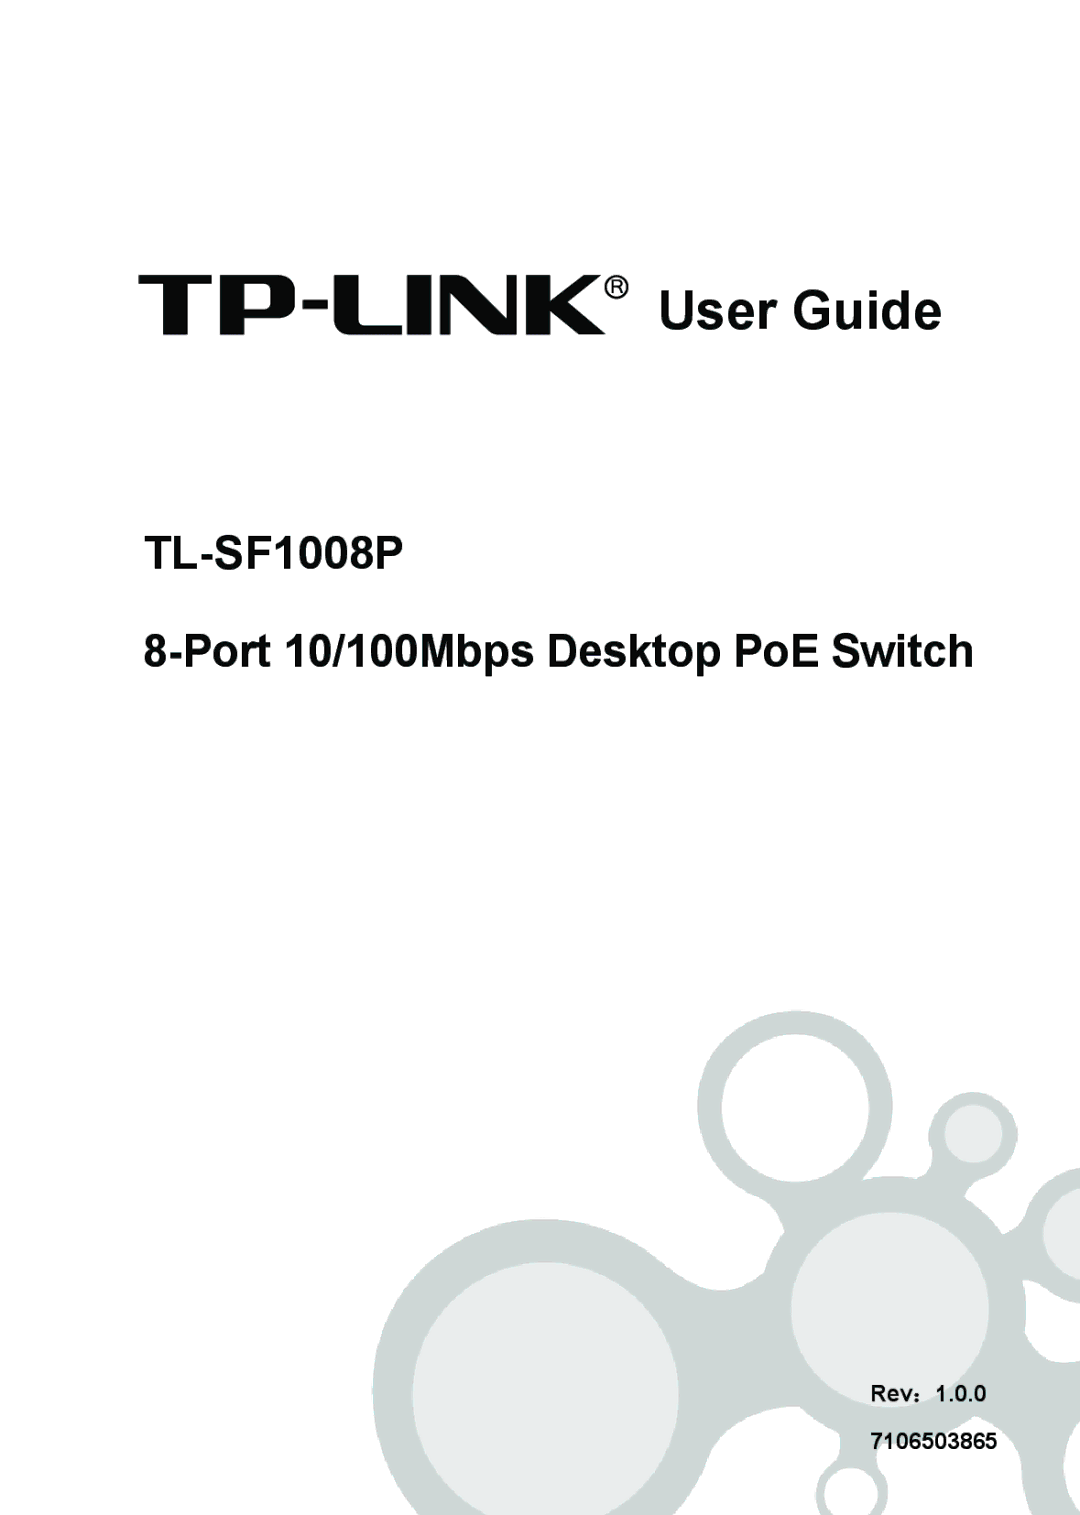 TP-Link TL-SF1008P manual User Guide 